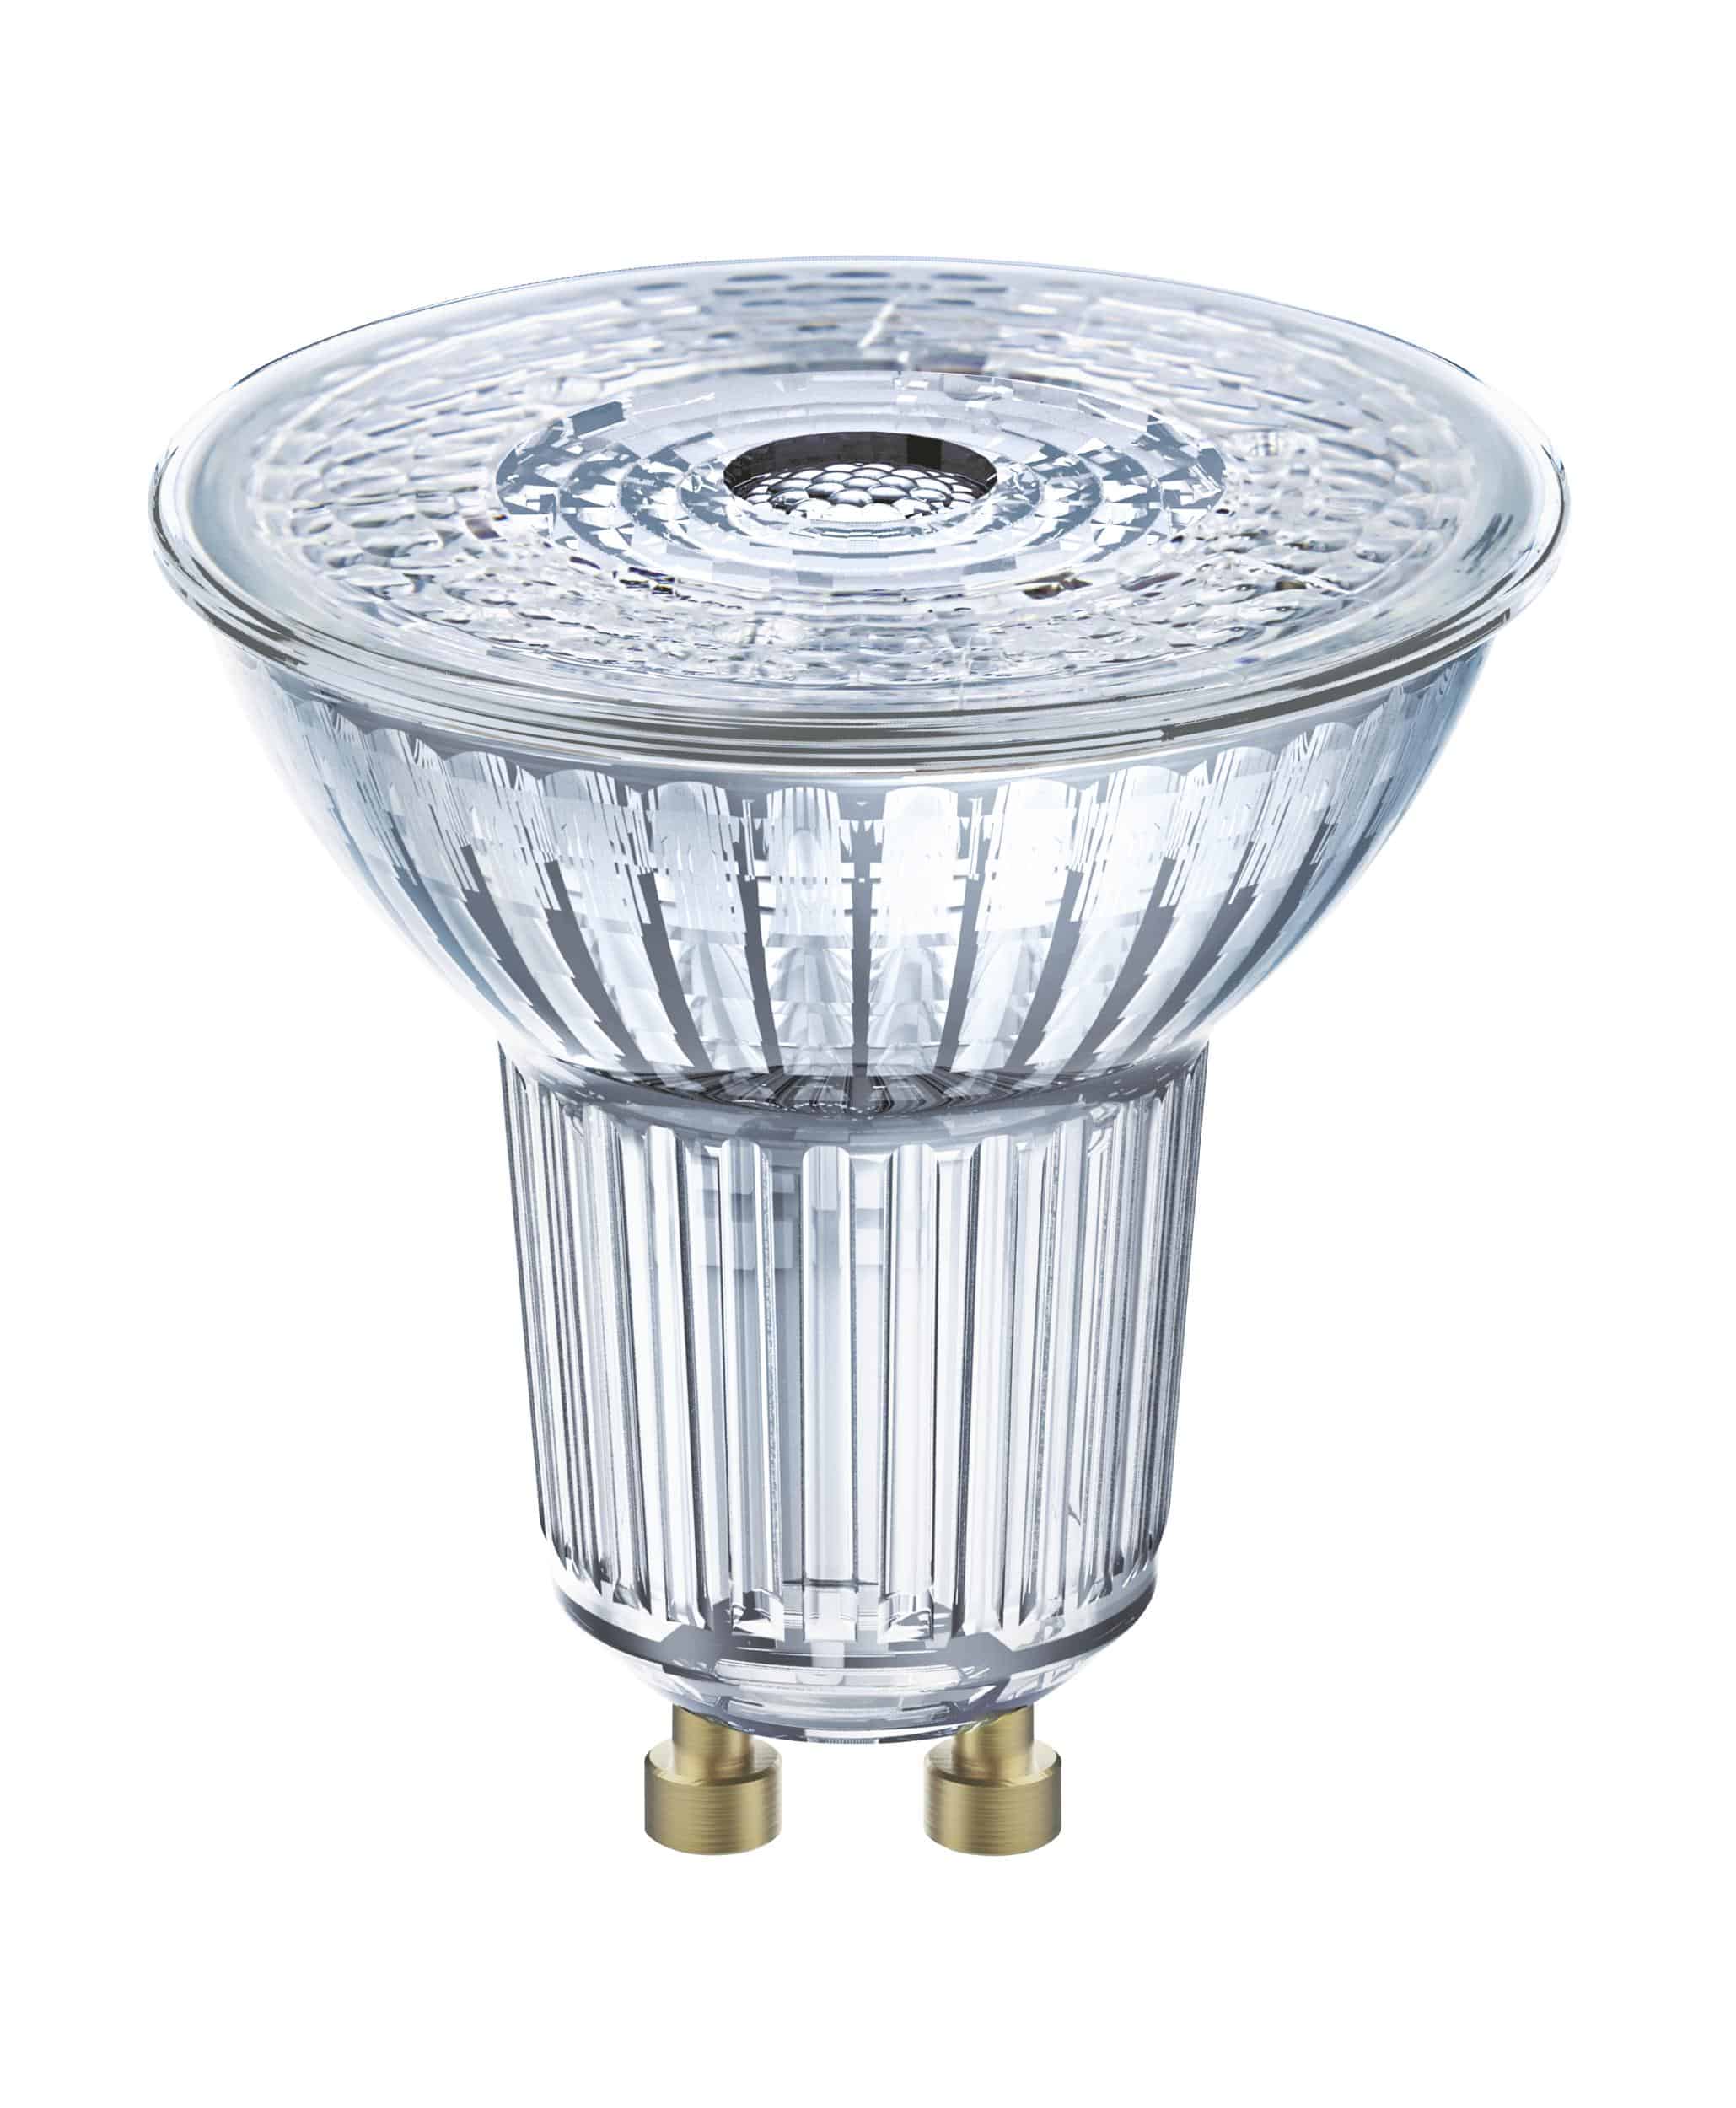 Osram LED Superstar Reflektorlampe PAR16 mit 8 Watt, GU10, kaltweiß, 36°, dimmbar